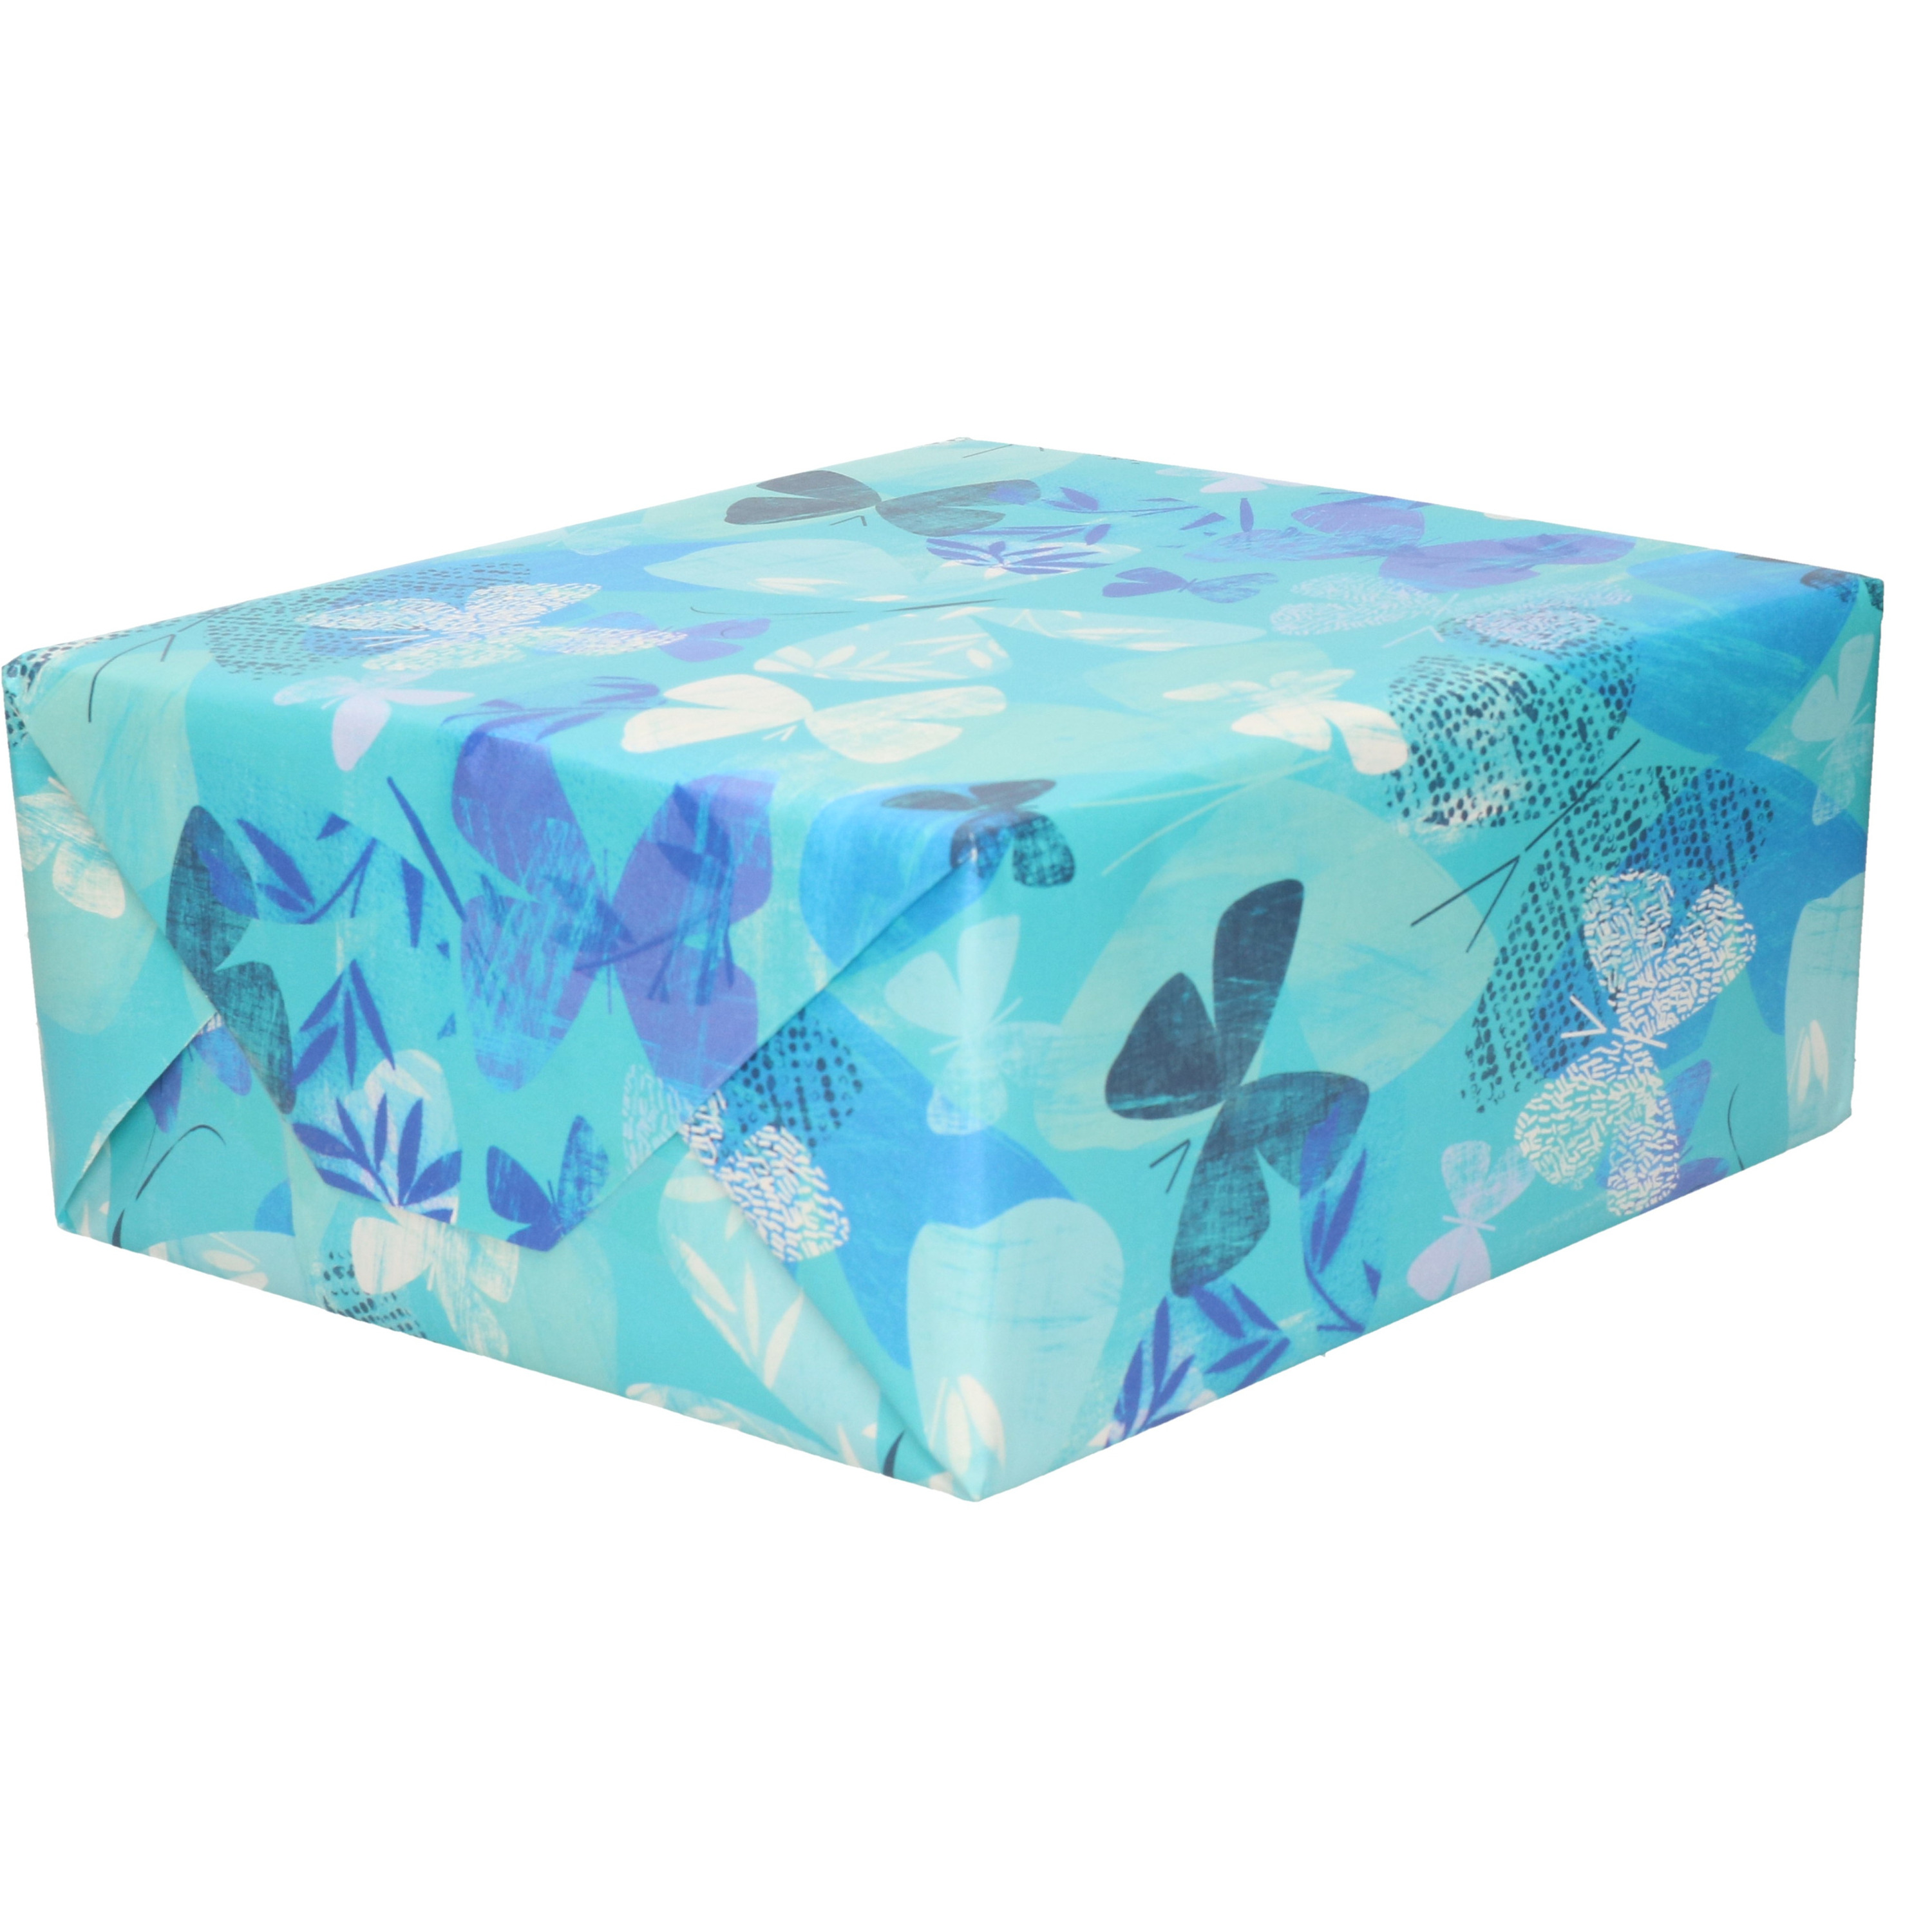 Inpakpapier/cadeaupapier - blauw - wit/blauwe vlinders - 200 x 70 cm